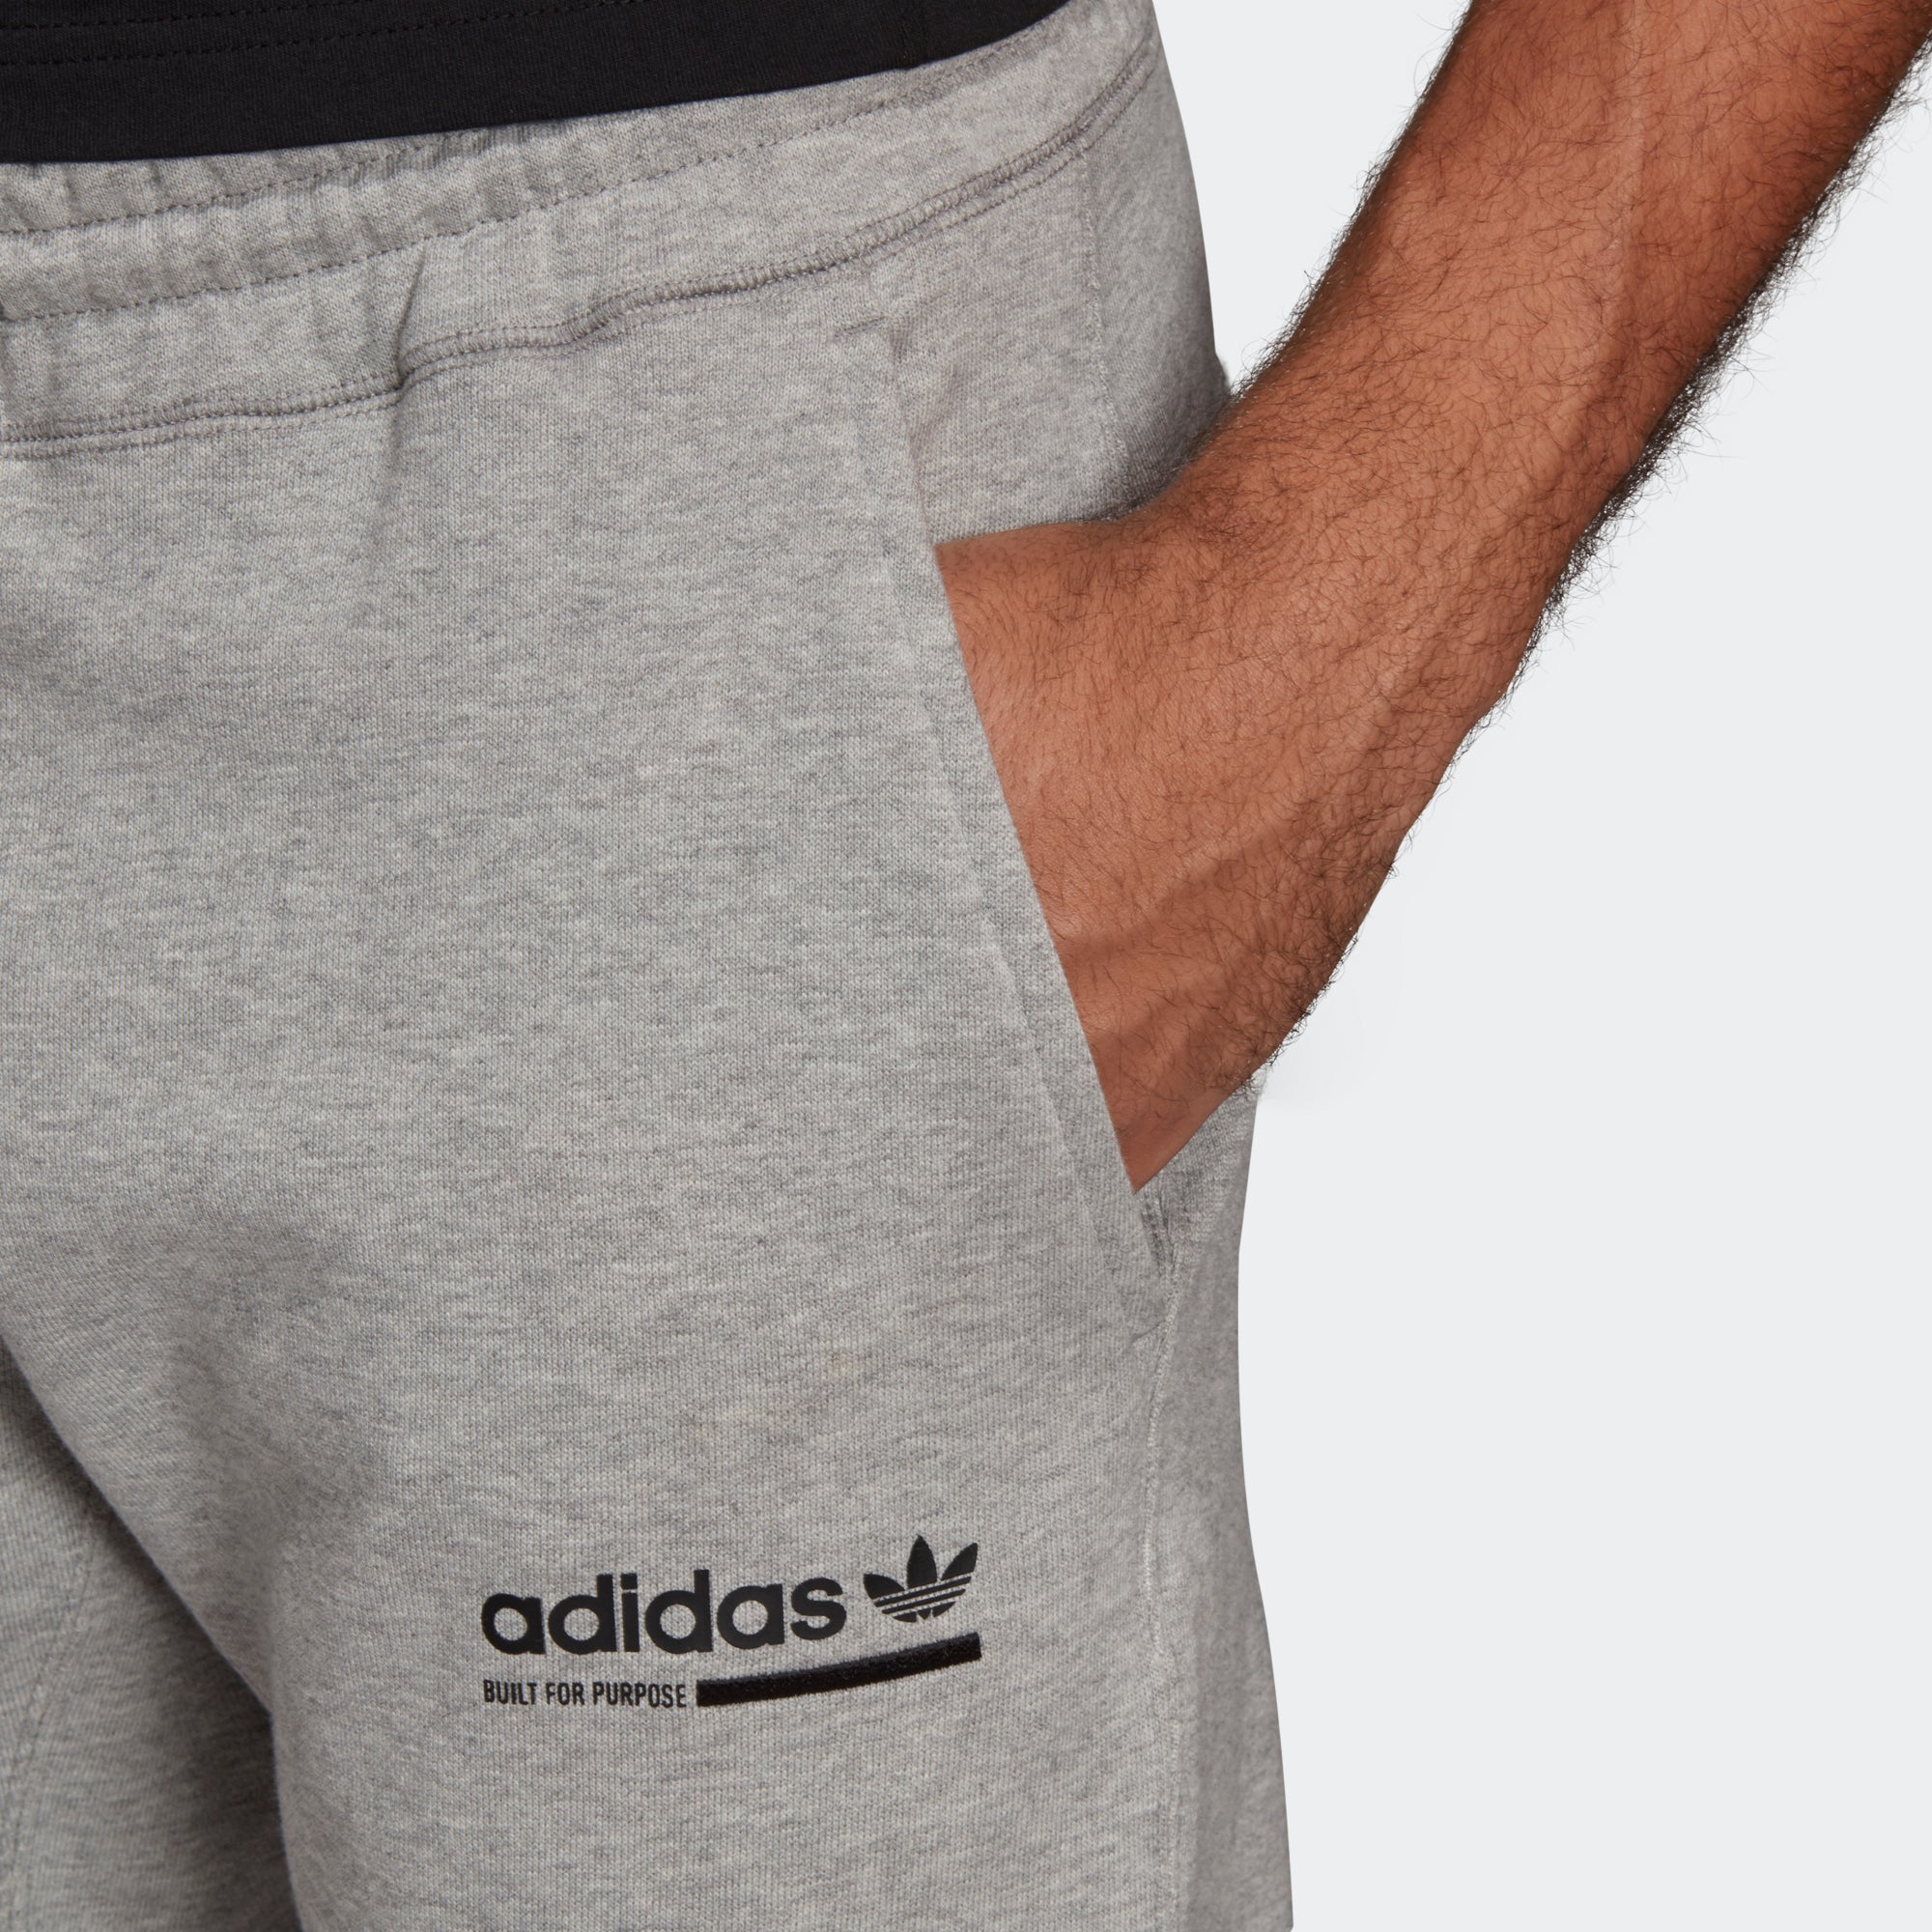 men's adidas gray sweatpants